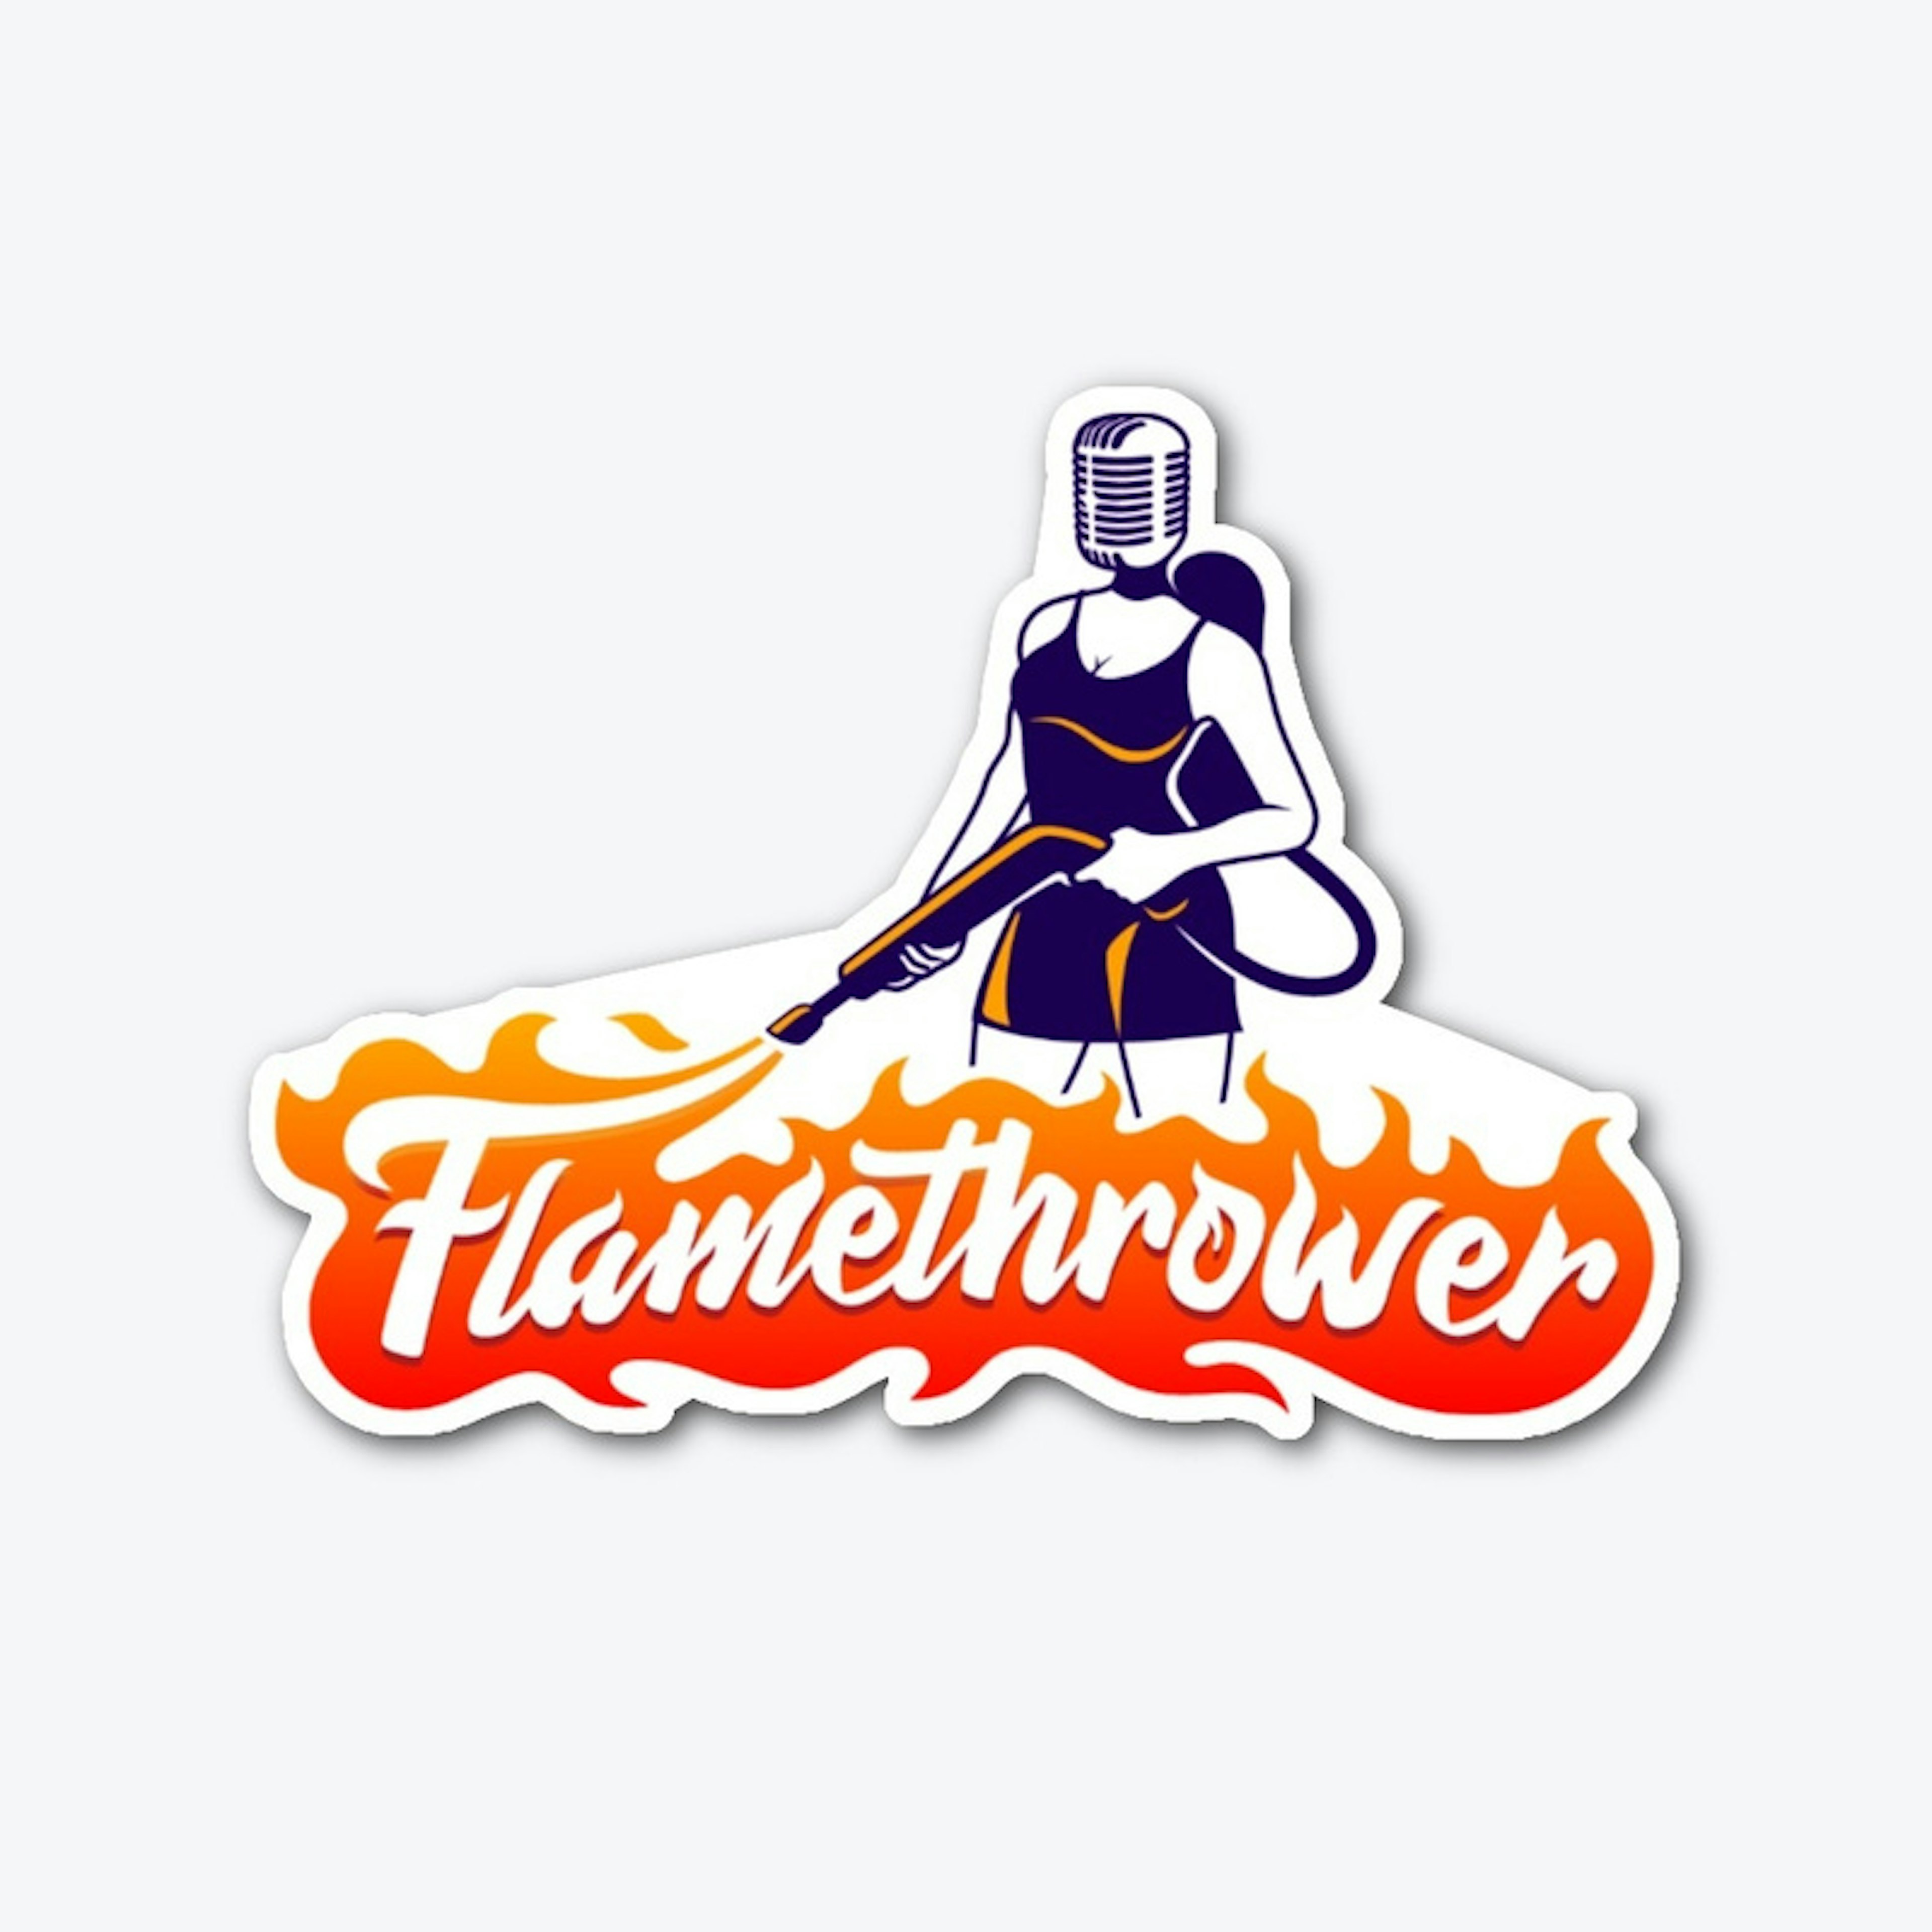 *New Flamethower Mic Head Sticker!